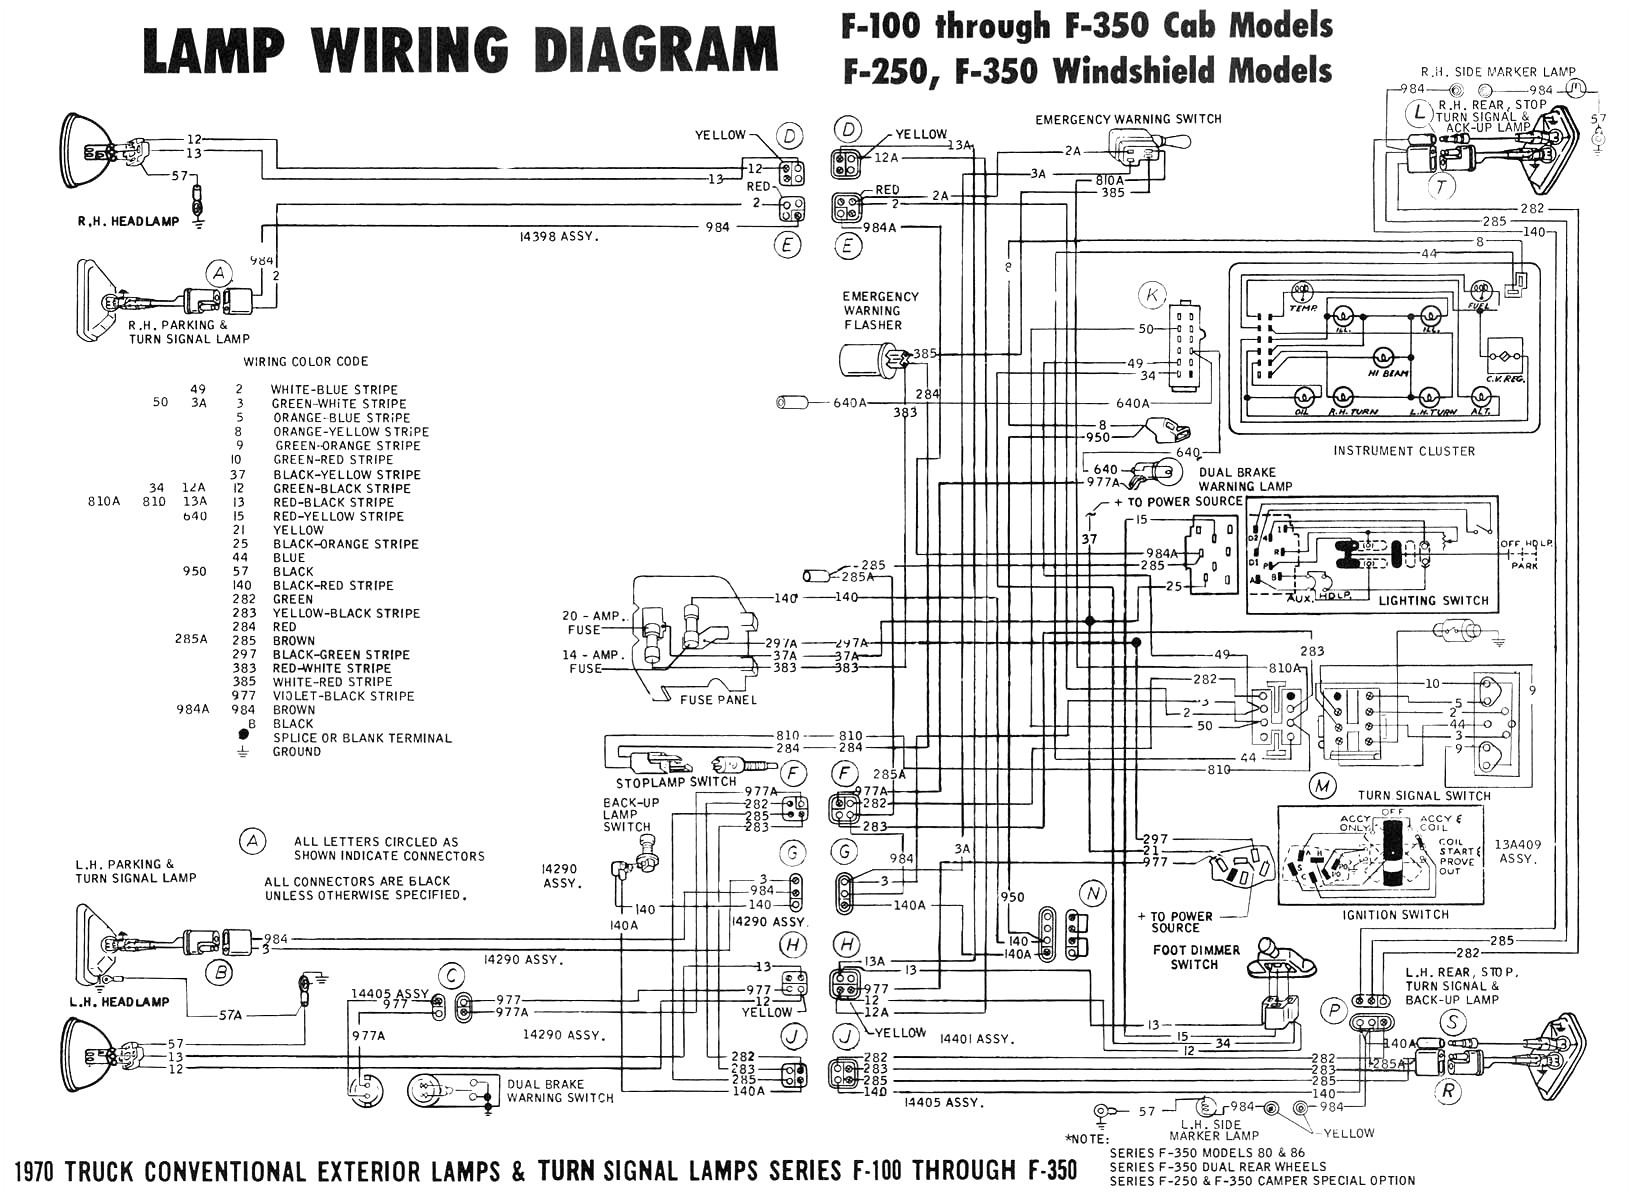 Wiring Diagram for A Starter solenoid solenoid Wiring Diagram 1991 ford Wiring Diagram Load